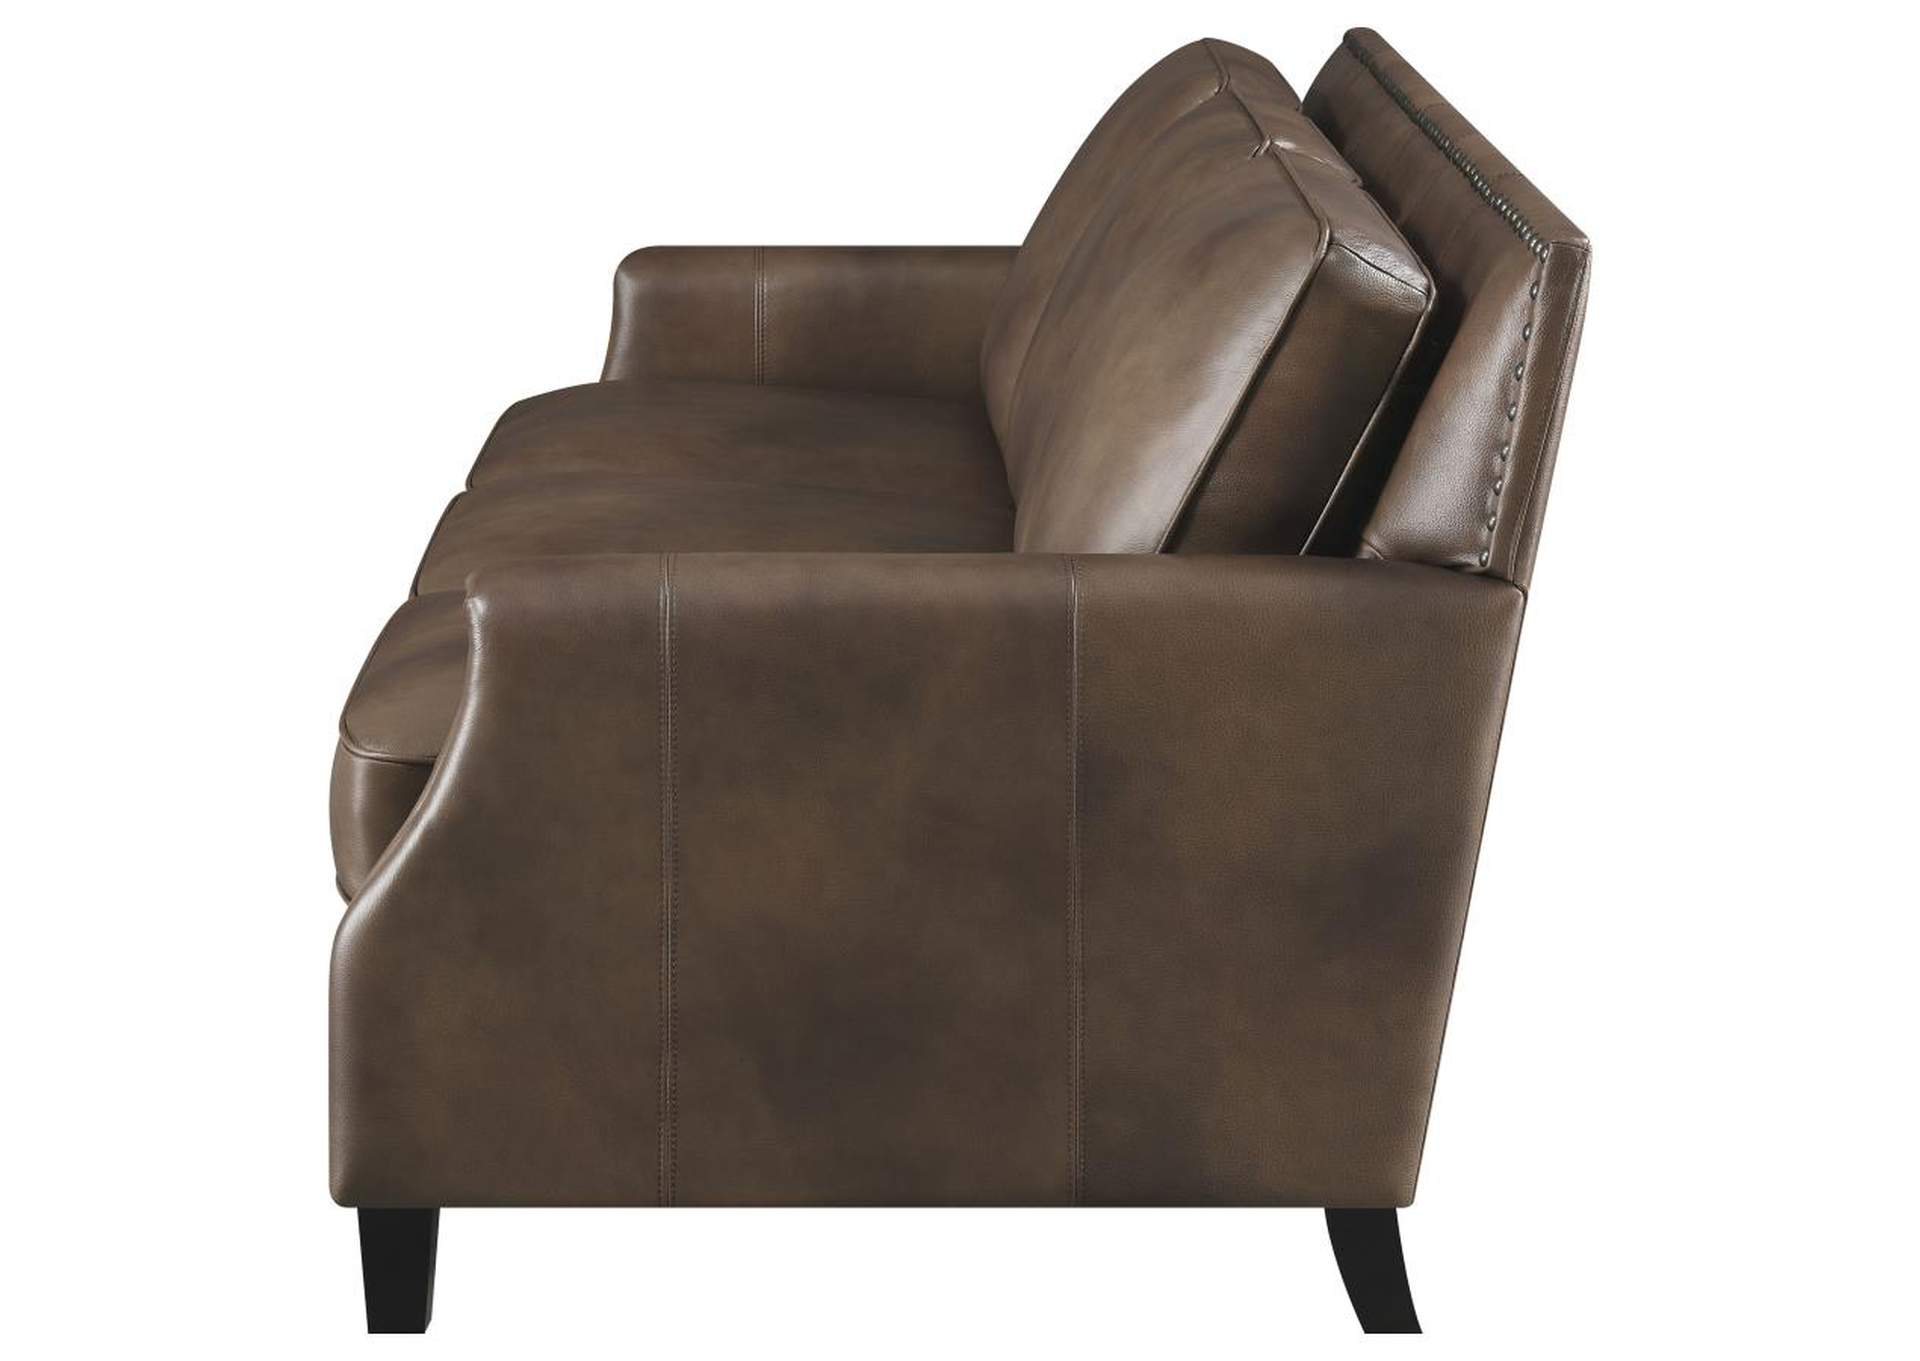 Leaton Upholstered Recessed Arms Sofa Brown Sugar,Coaster Furniture